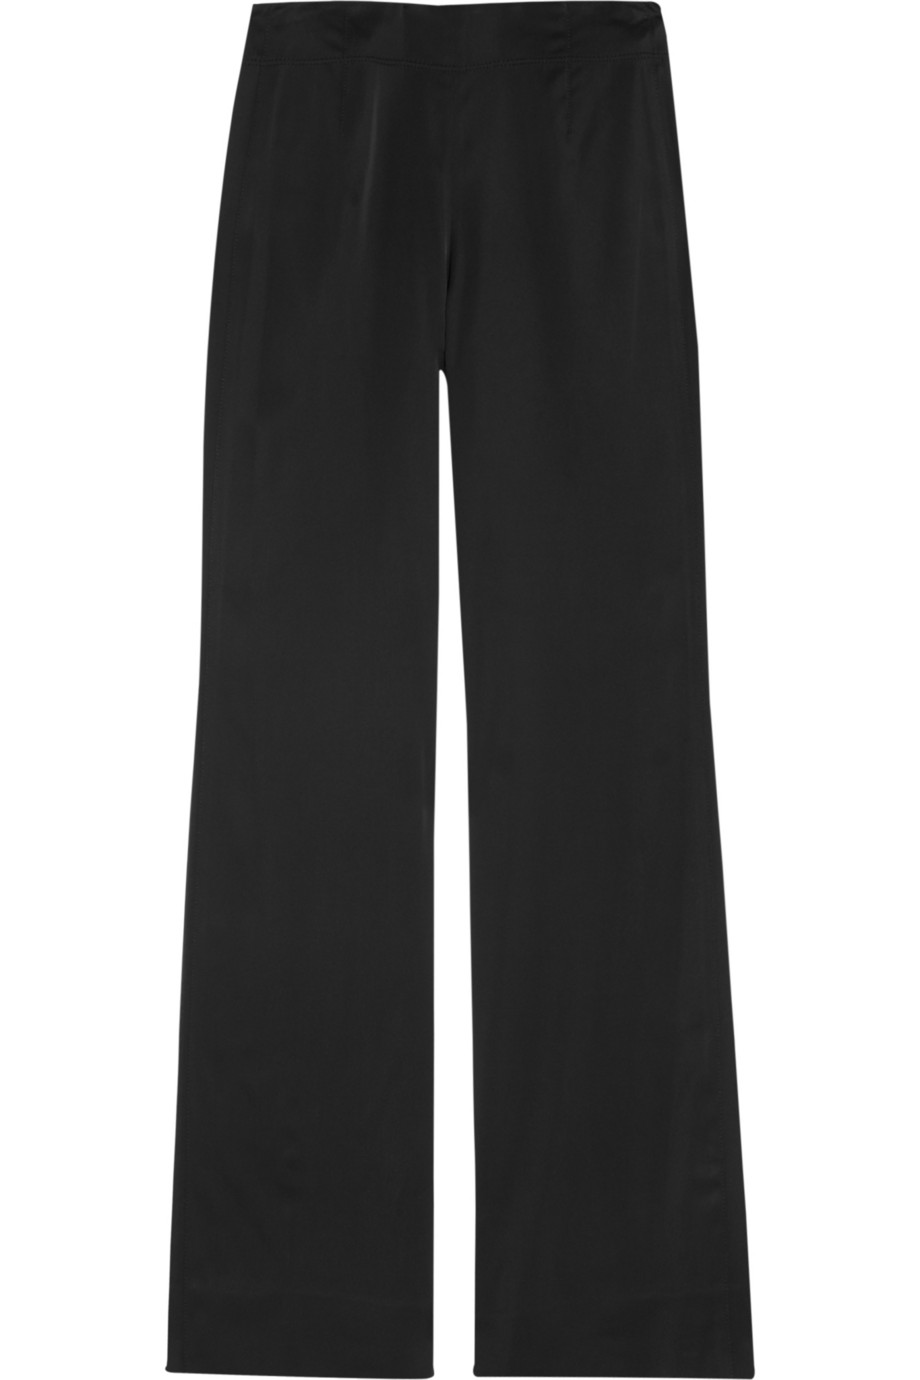 Lyst - Donna Karan Wide-leg Stretch-silk Pants in Black